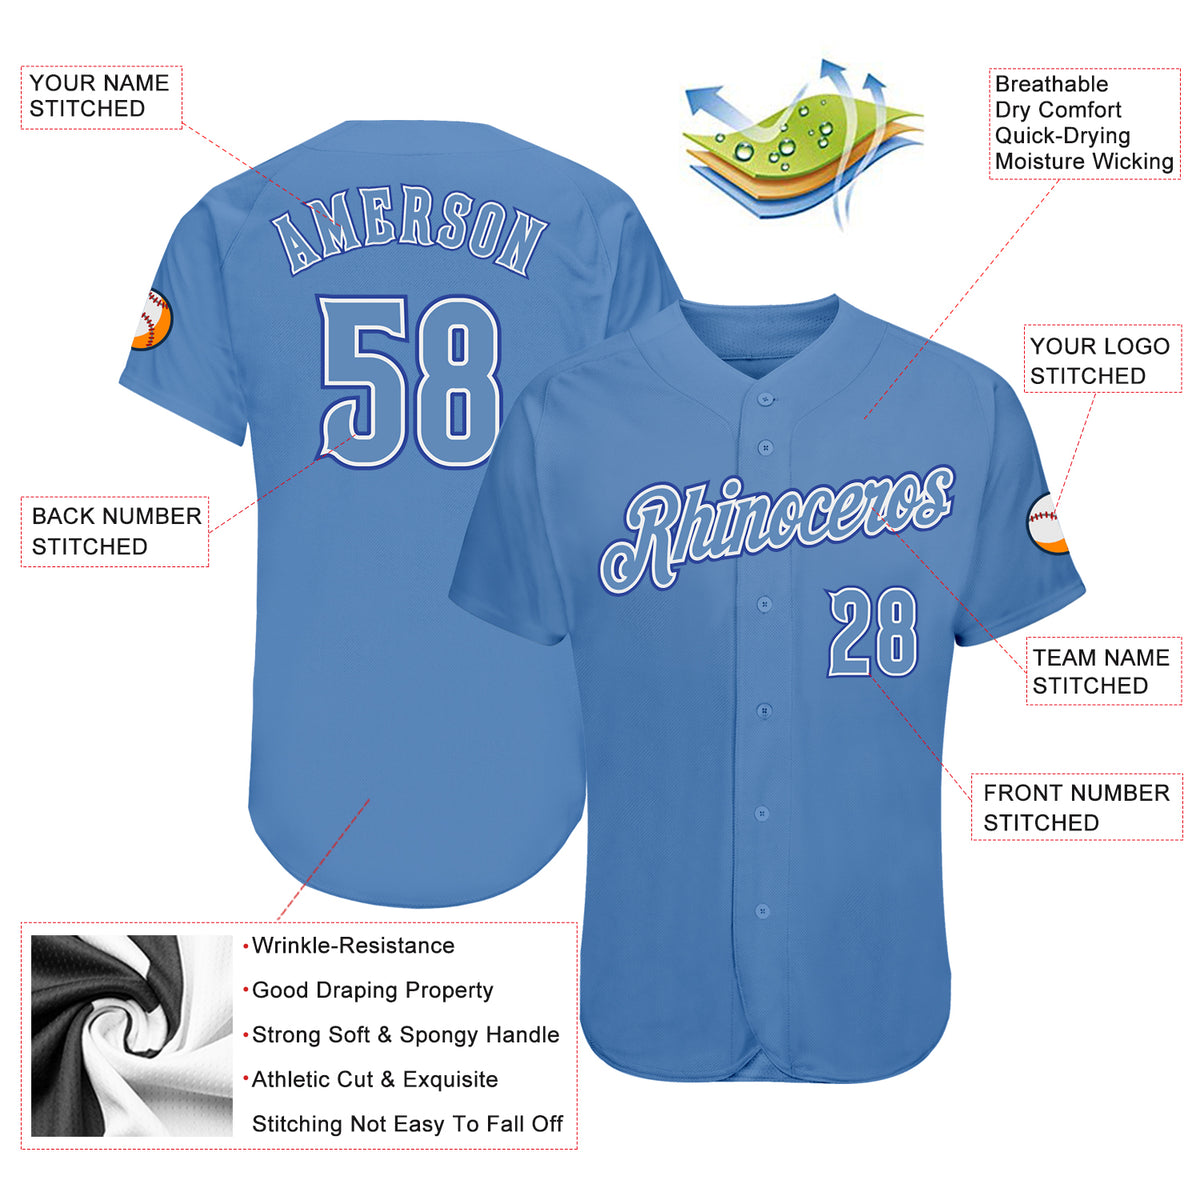 Custom Royals Jersey - Light Blue Stitch Baseball Gear - Pullama